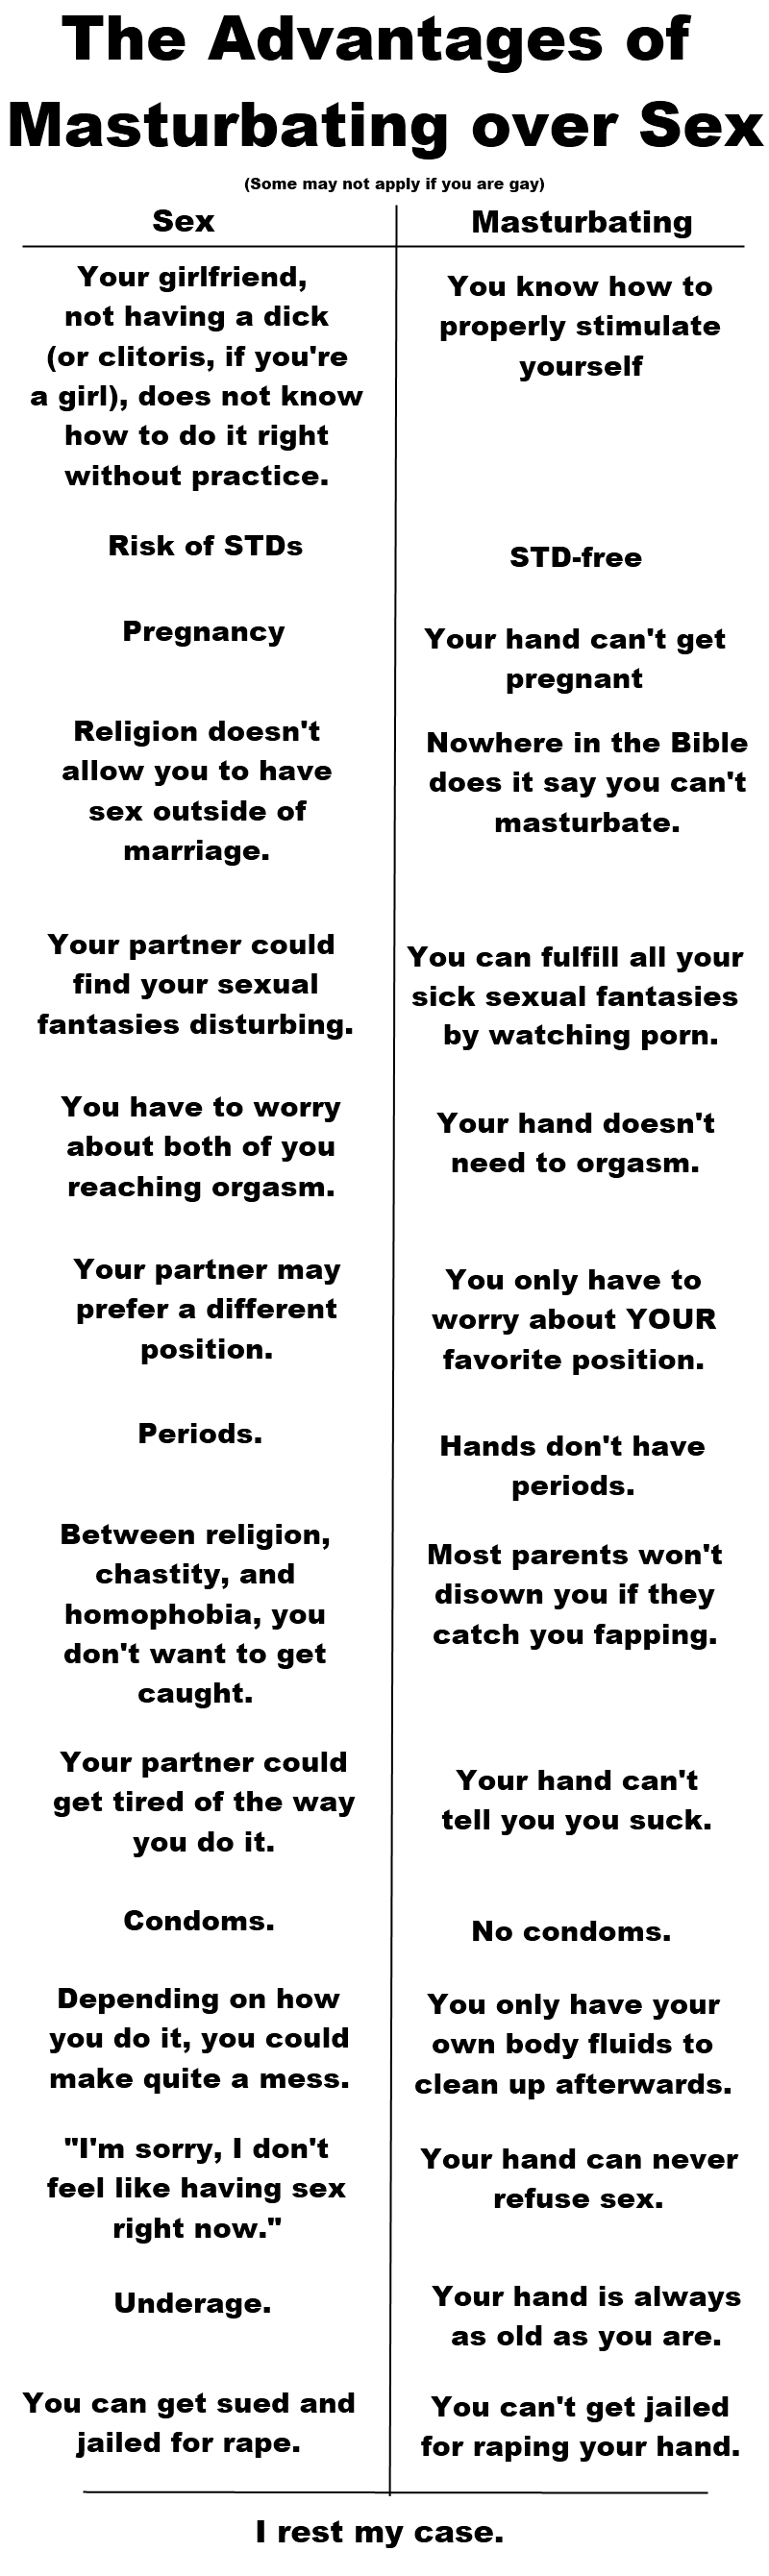 Masturbation vs